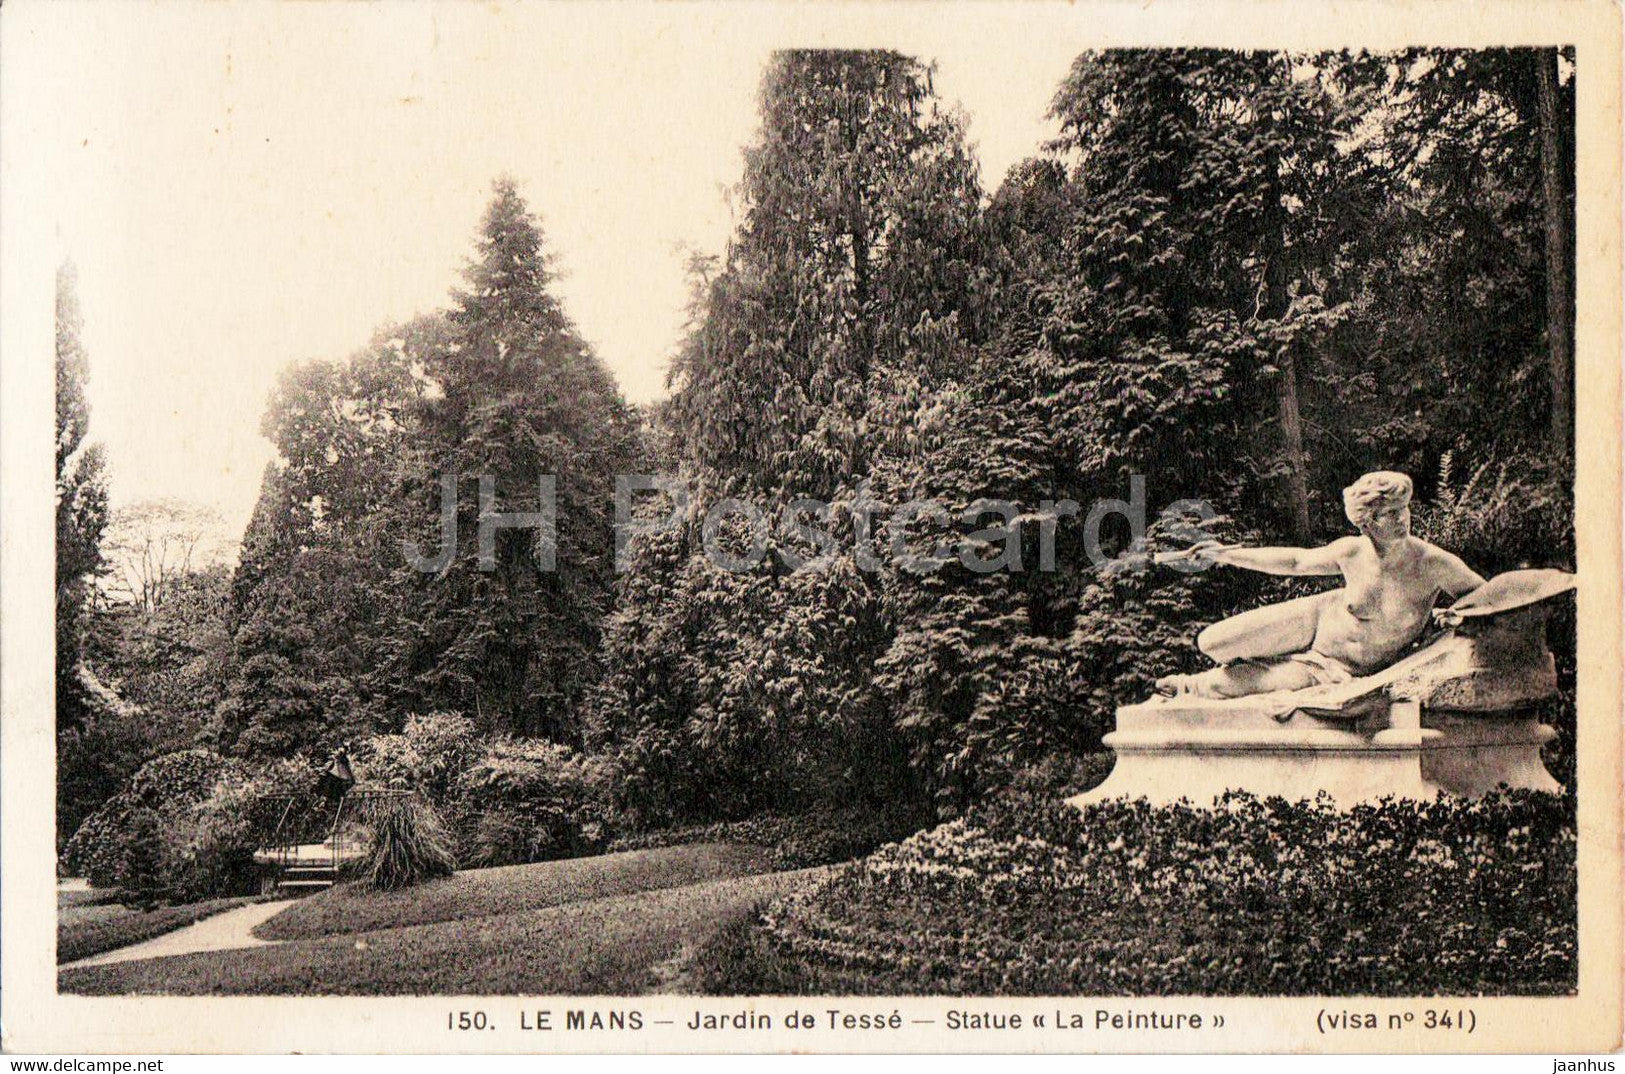 Le Mans - Jardin de Tesse - Statue La Peinture - 150 - old postcard - France - unused - JH Postcards